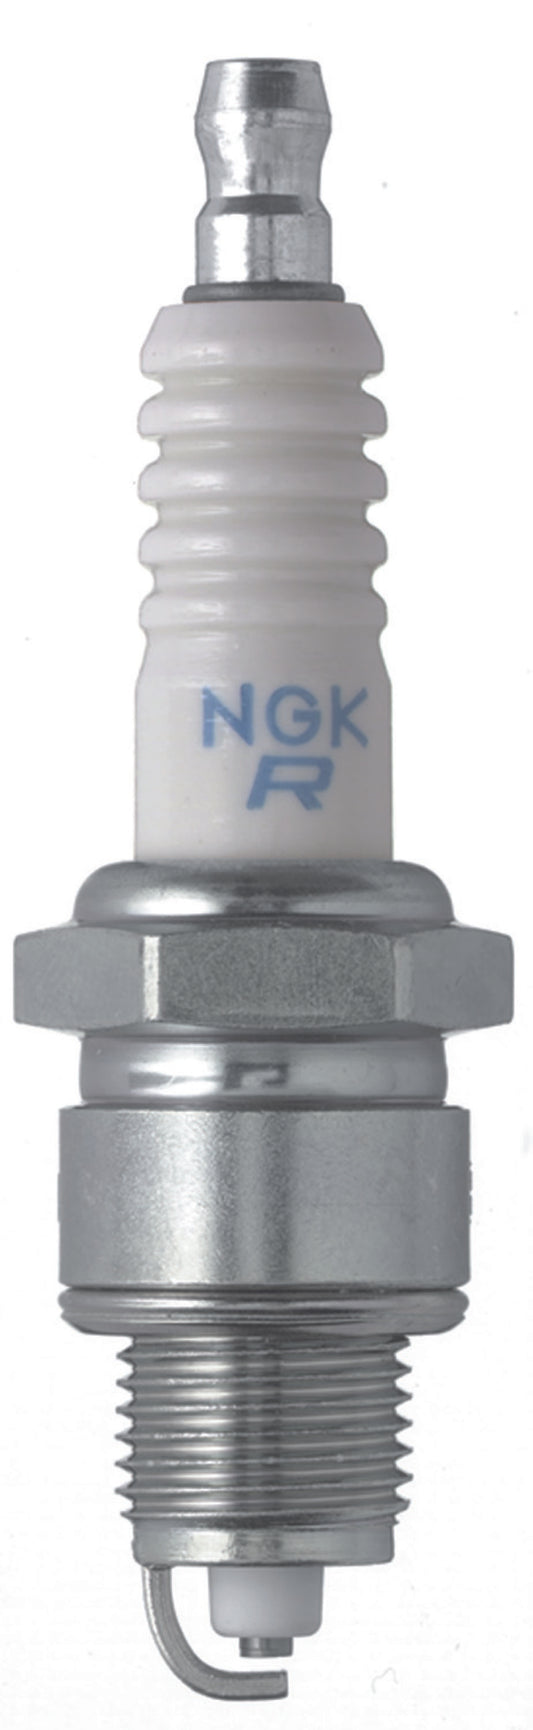 NGK Standard Spark Plug Box of 10 (BPR8HS)